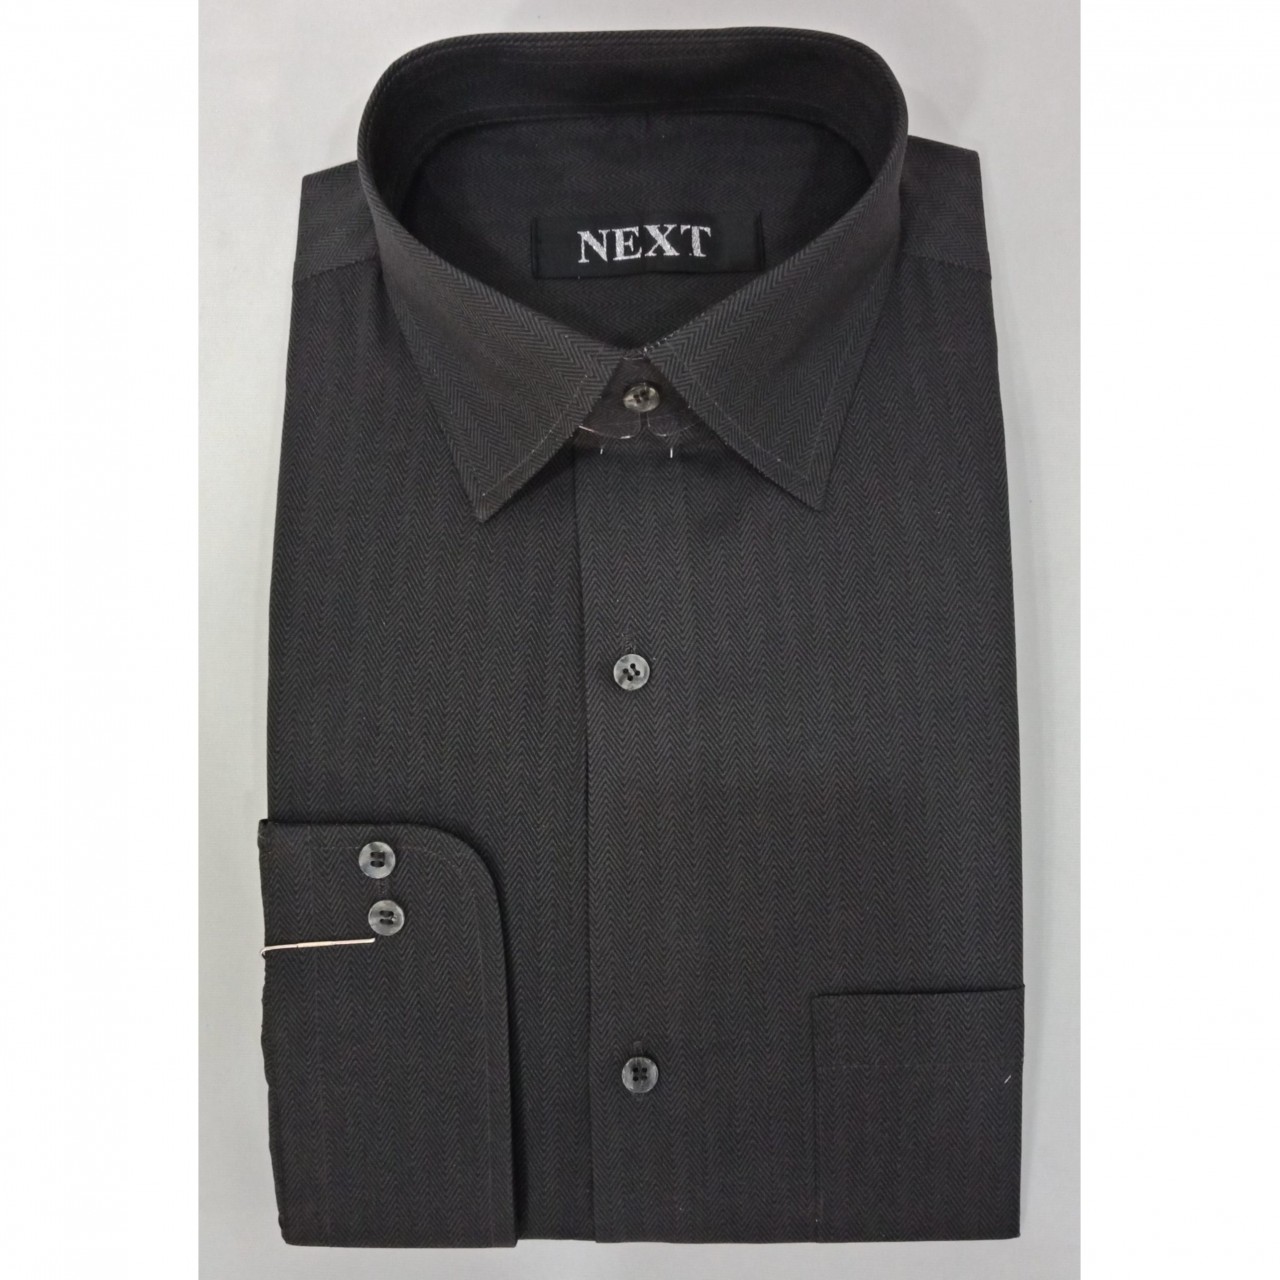 Herringbone Cotton Formal Shirt For Men - Double Needle Stitching - Dark Grey